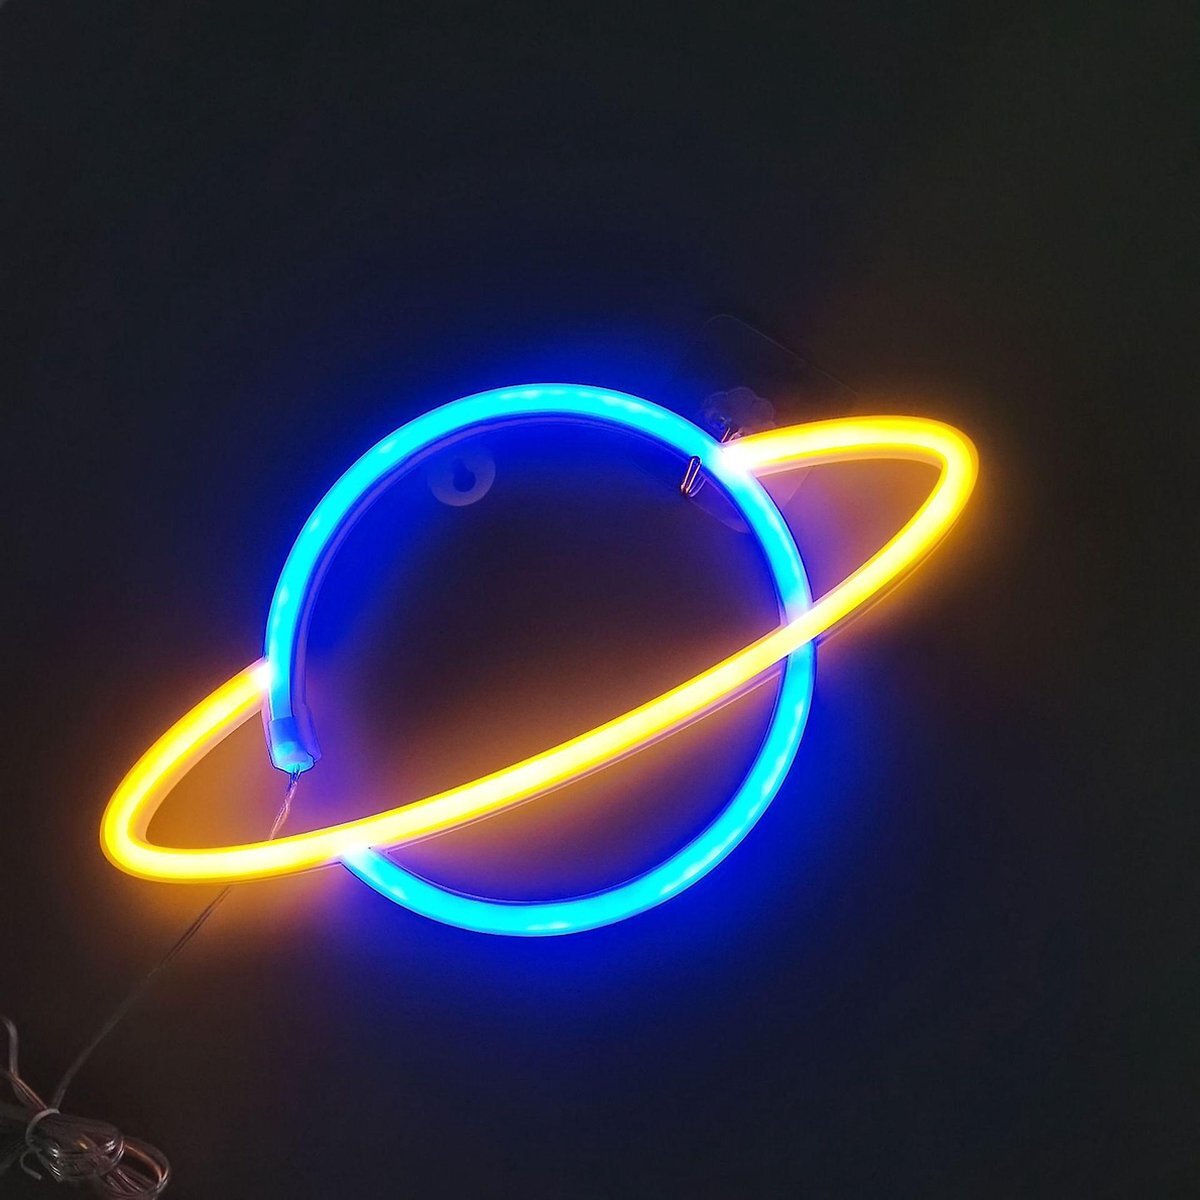 Ydemanne Neon led lamp - Planeet - Blauw / Geel - 17 x 30 cm - Incl. 3 AA batterijen - USB - Wandlamp